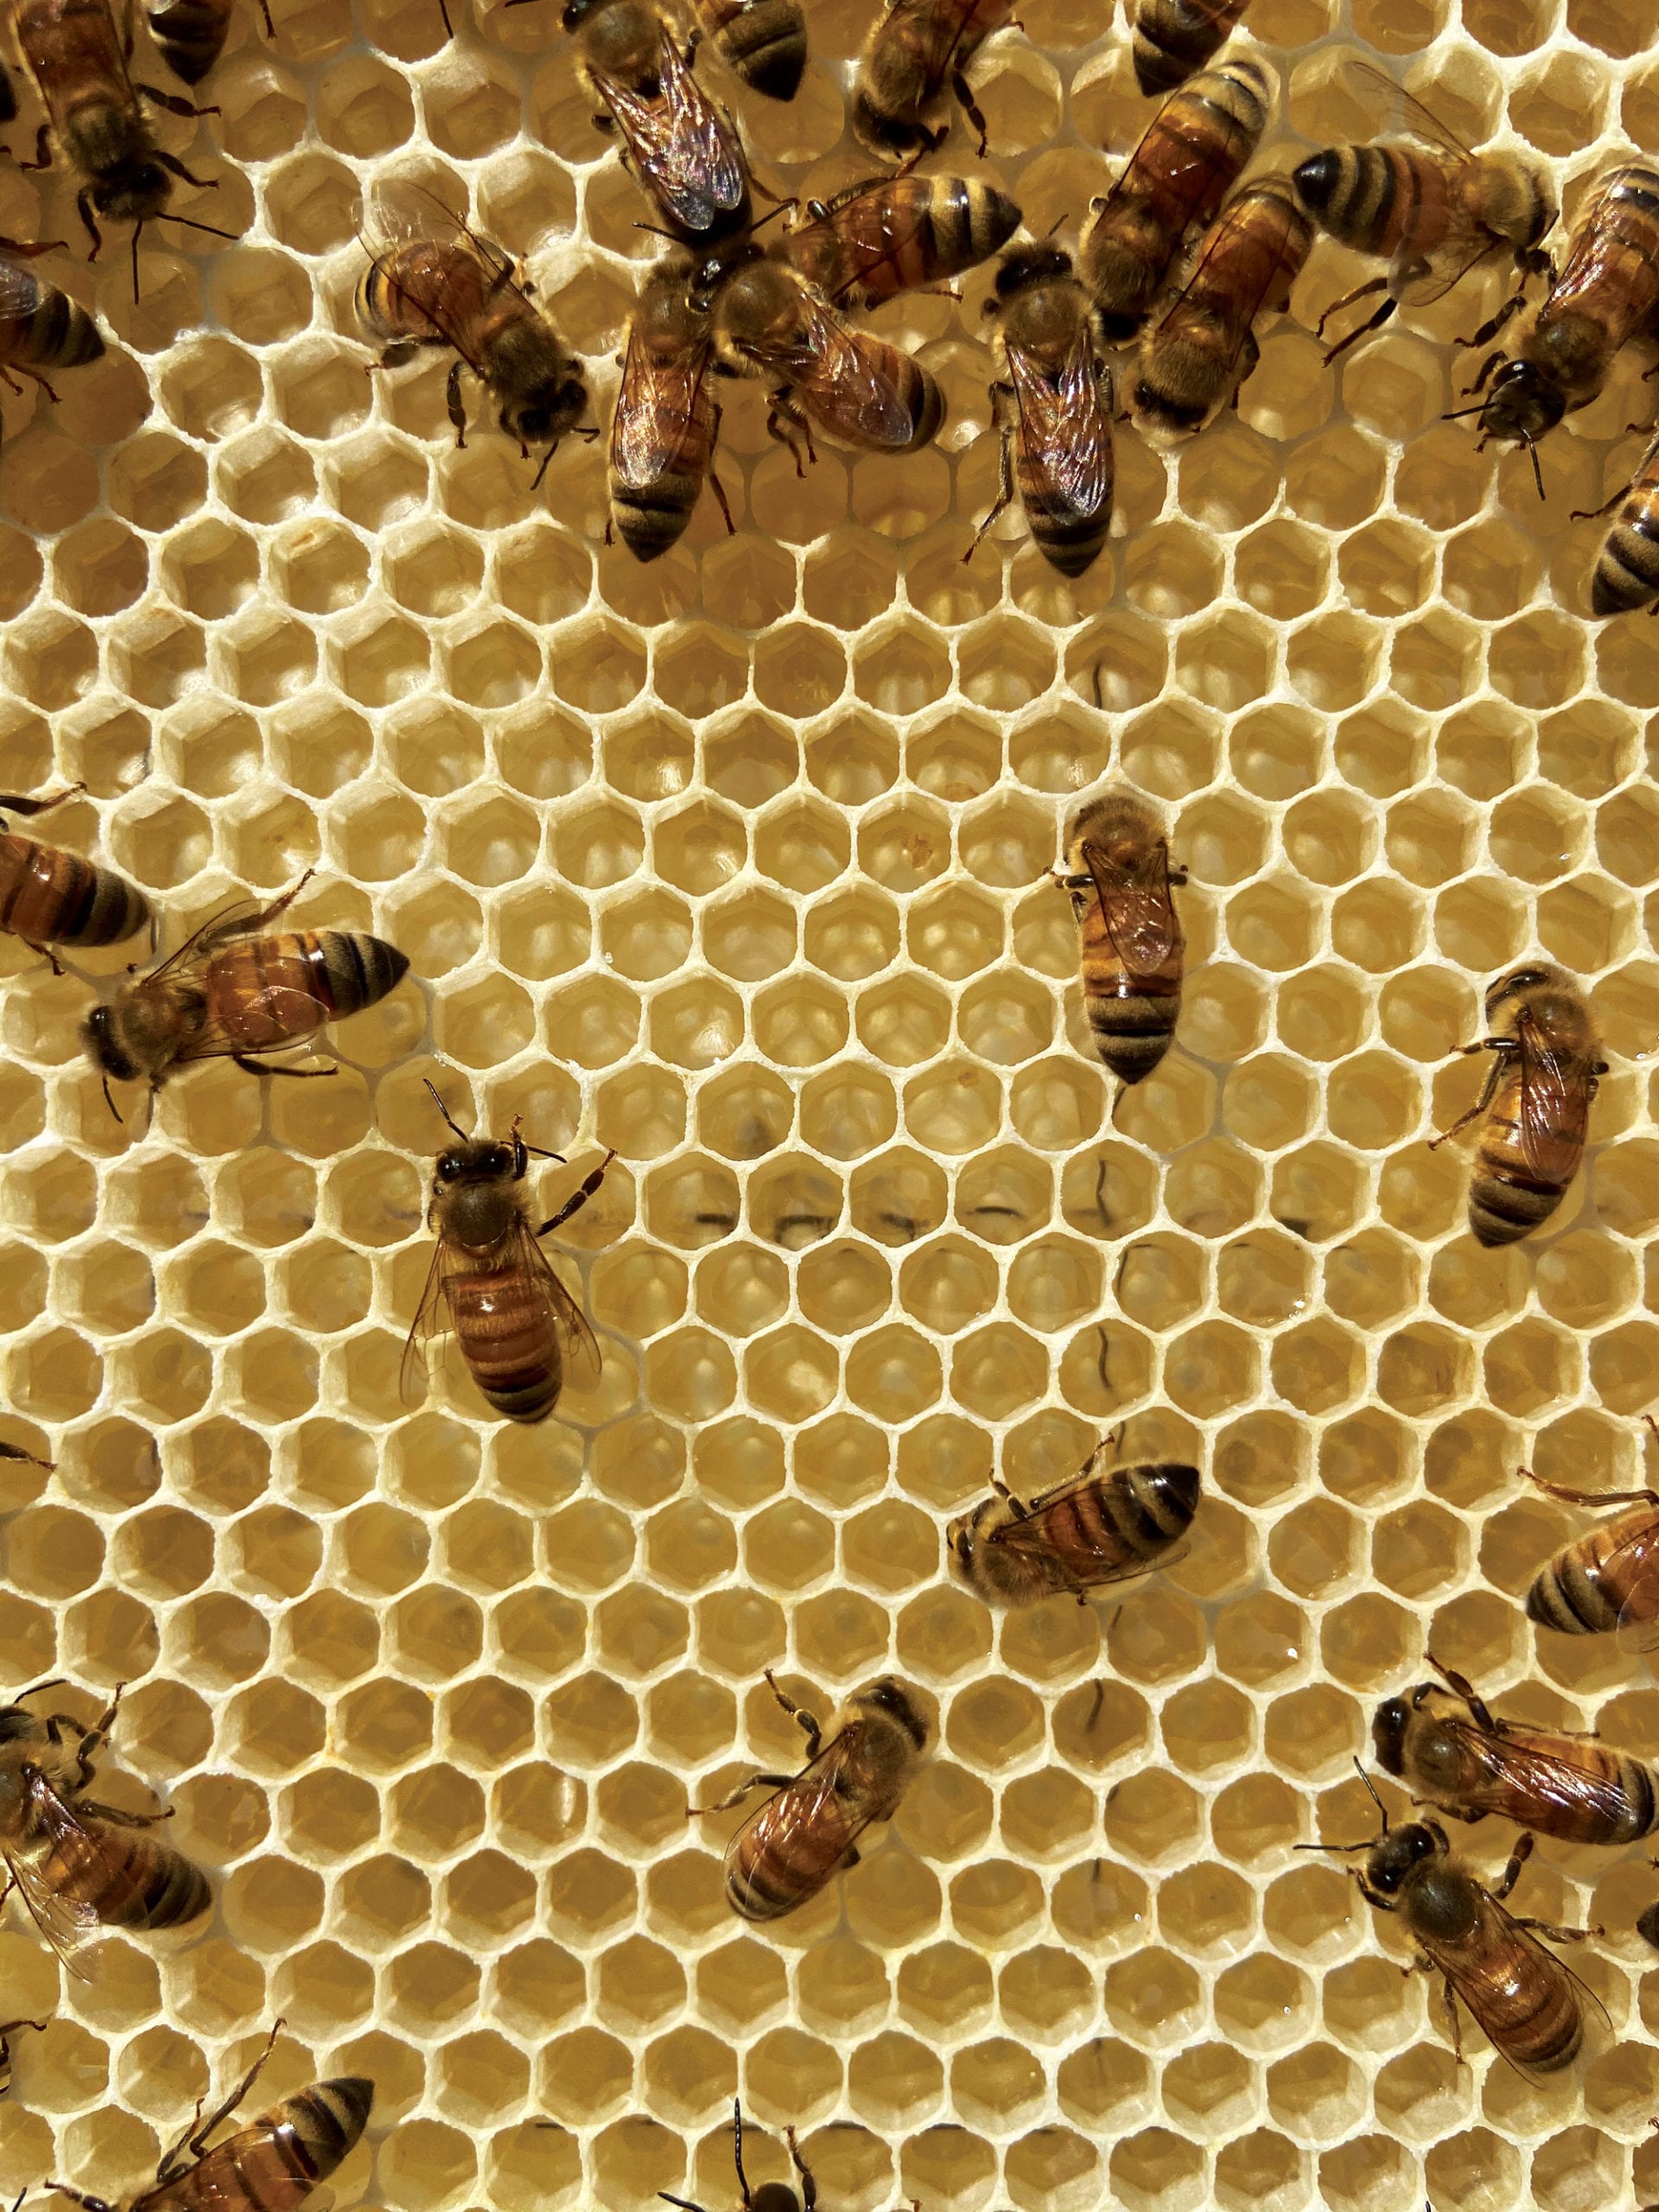 https://imbibemagazine.com/wp-content/uploads/2021/03/honey-bees-honey-comb-crdt-todd-hardie-scaled.jpg